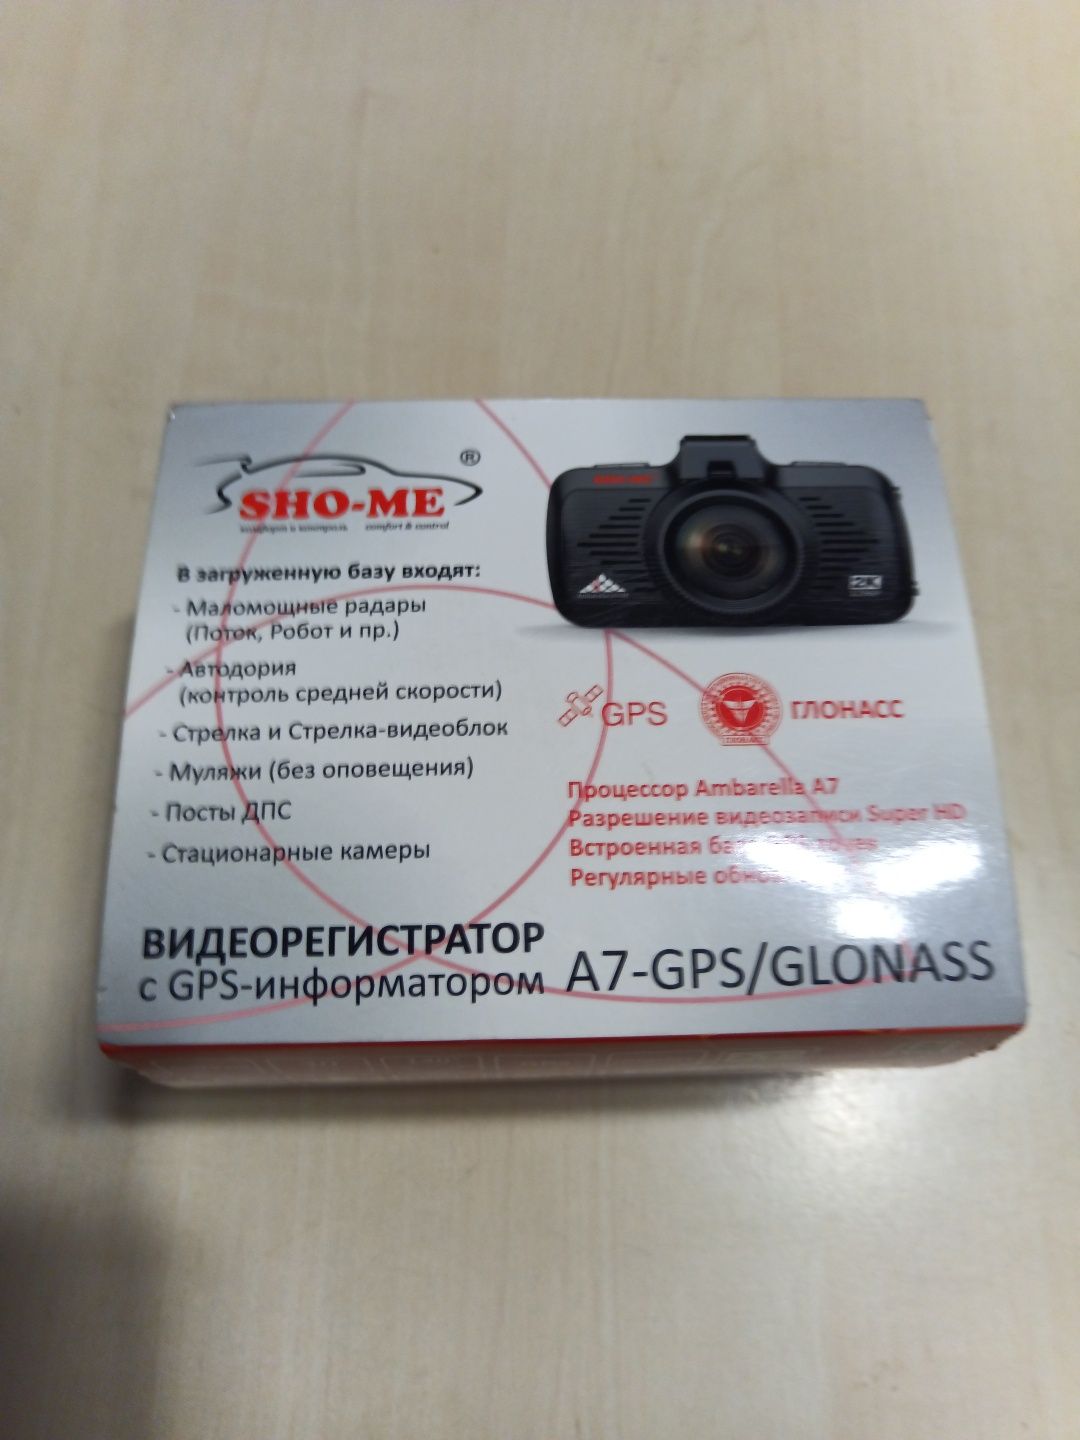 Видеорегистратор SHO-ME 7 GPG/GLONASS